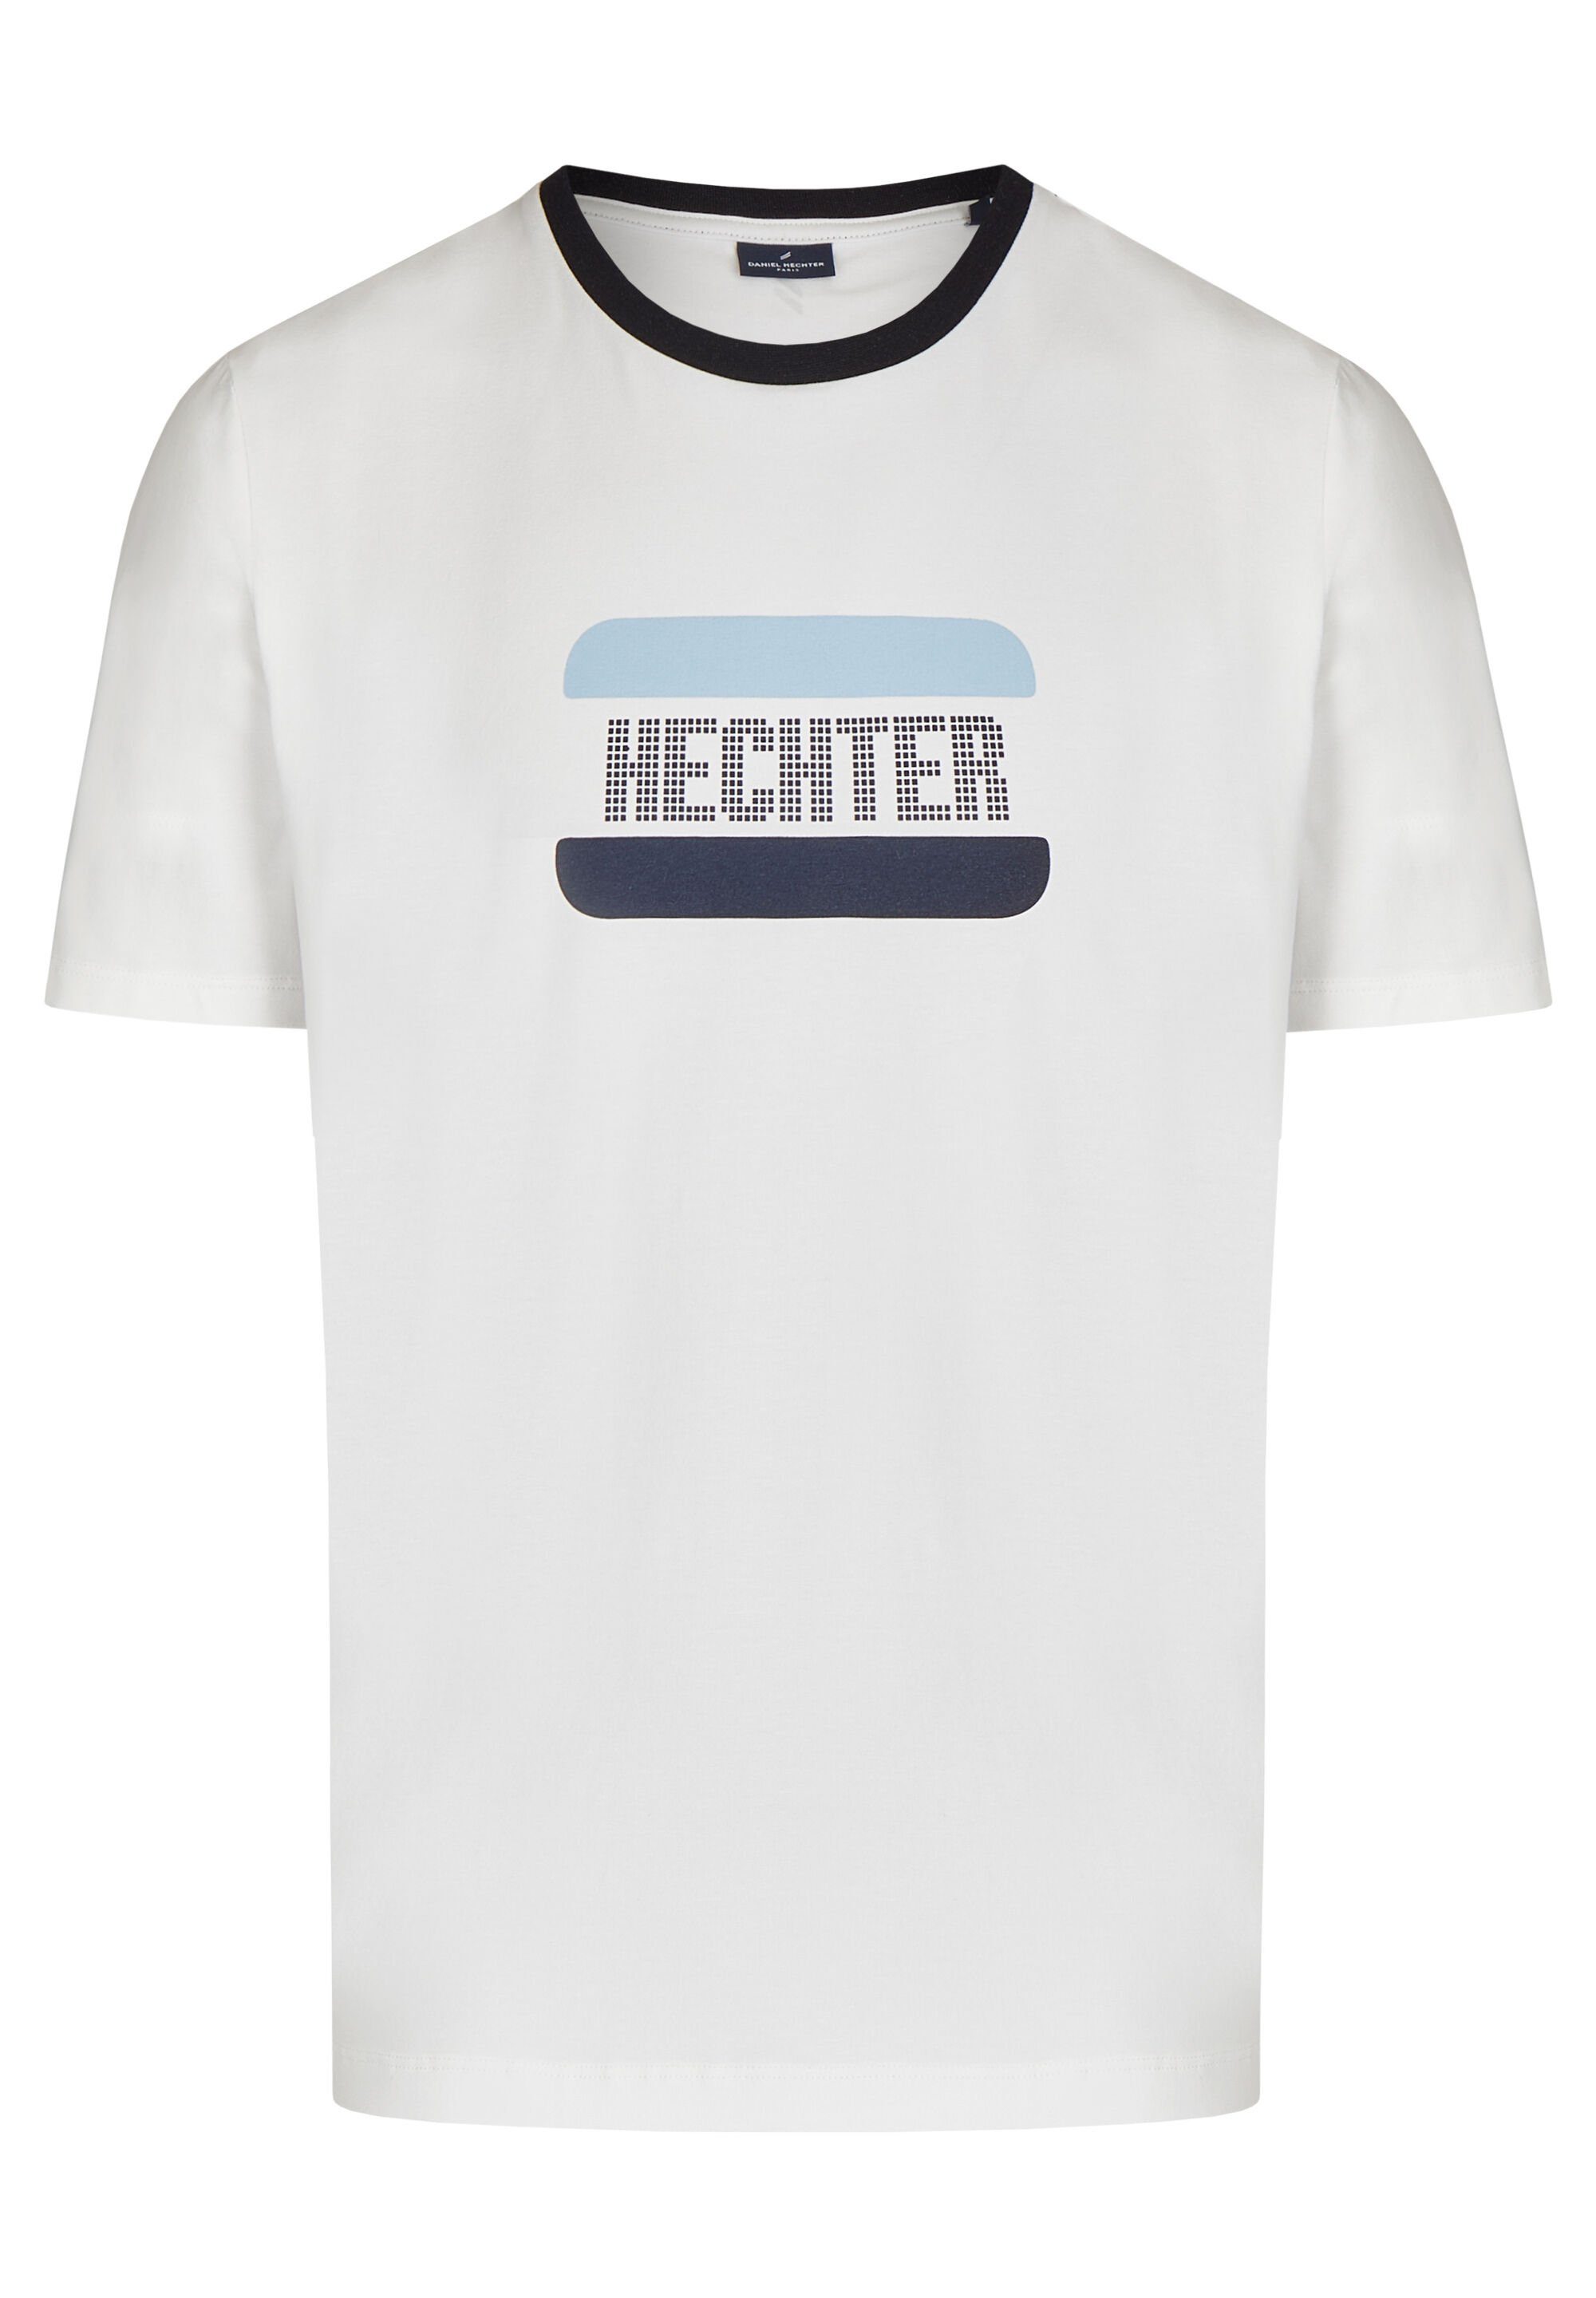 HECHTER PARIS T-Shirt mit Iconic Print white | T-Shirts